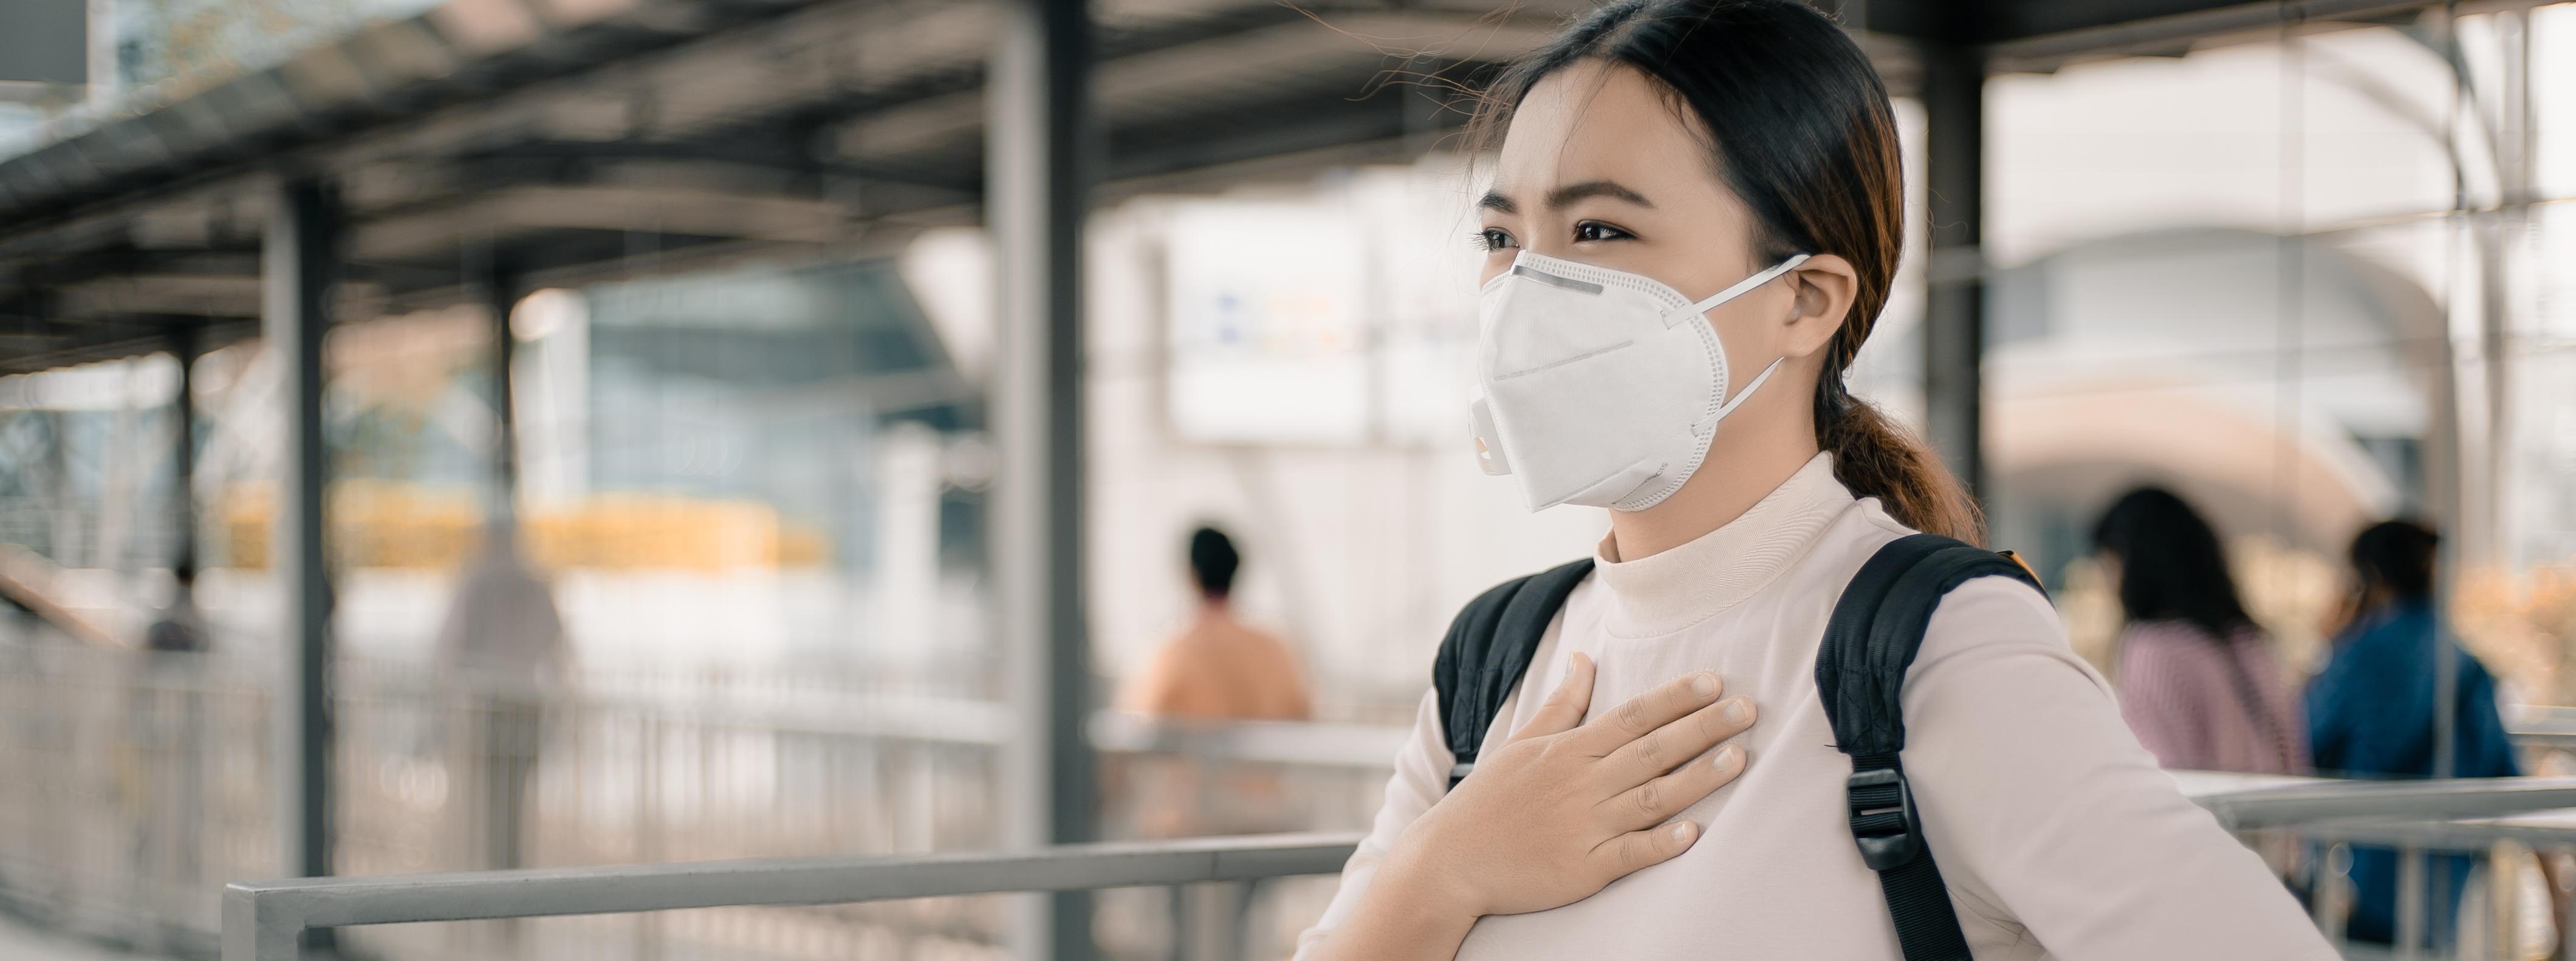 Cegah Wuhan Pneumonia, Wabah Baru yang Menghantui Dunia